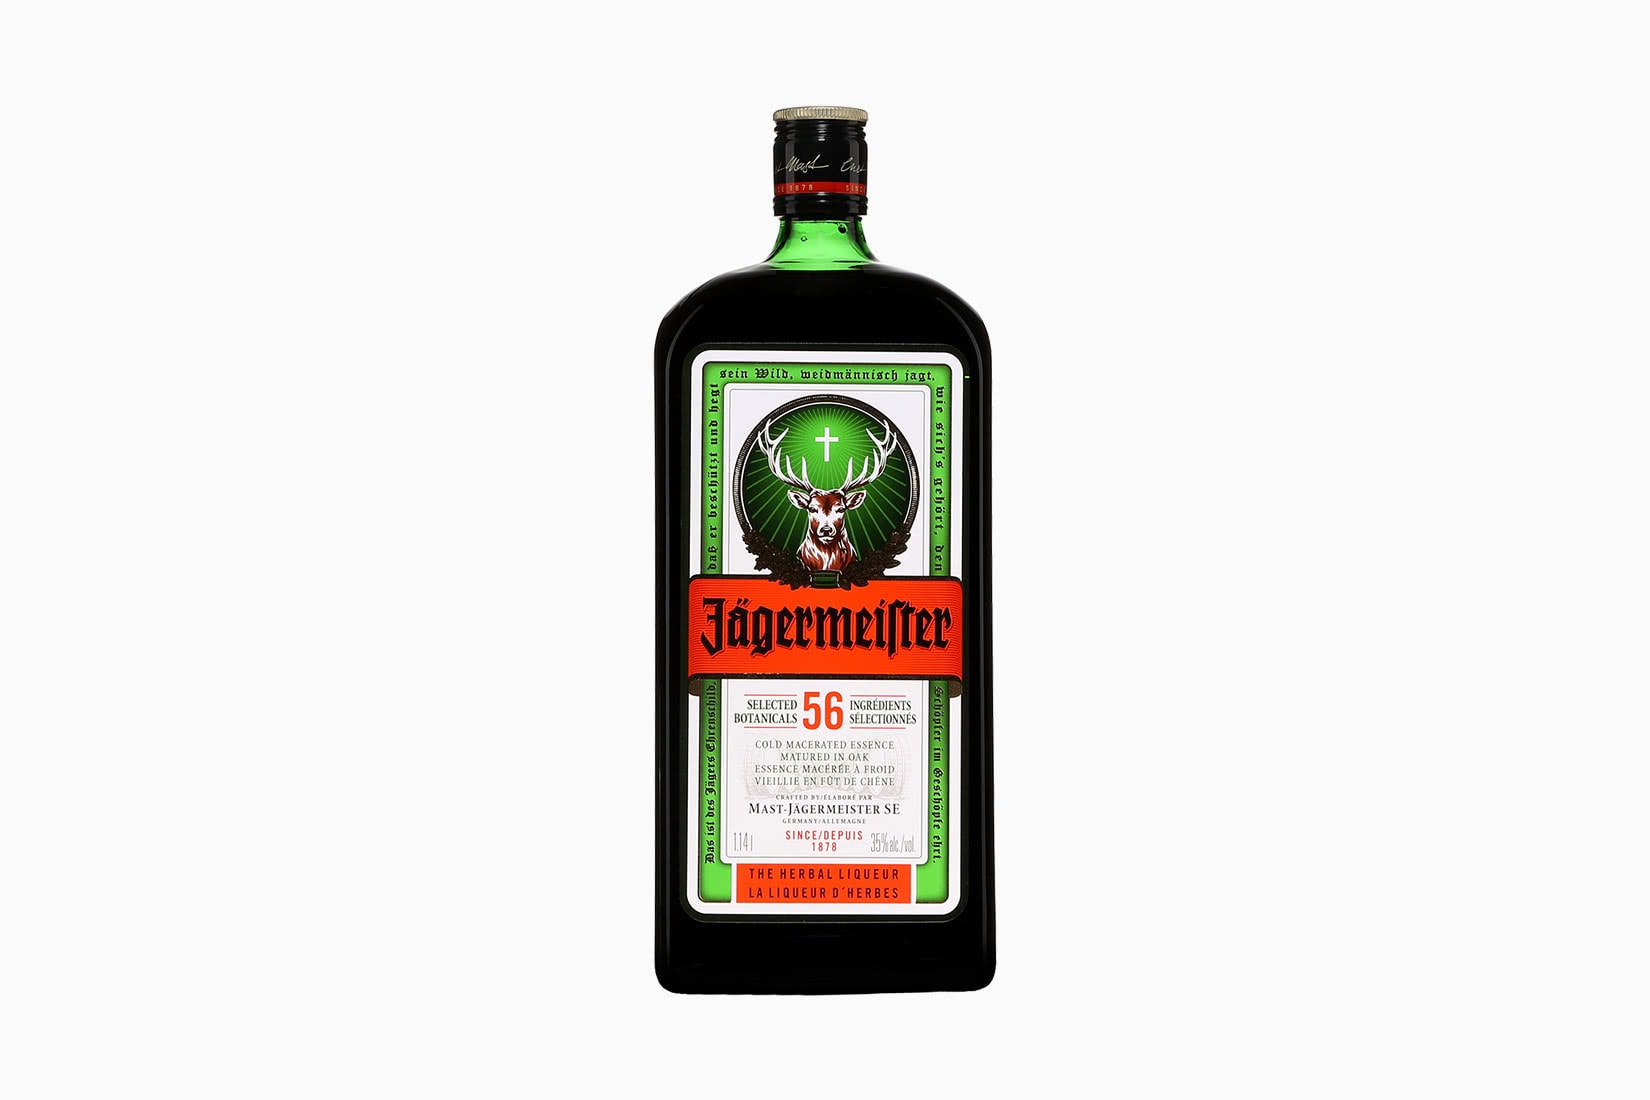 Jägermeister 56 herb liquor bottle price size review - Luxe Digital